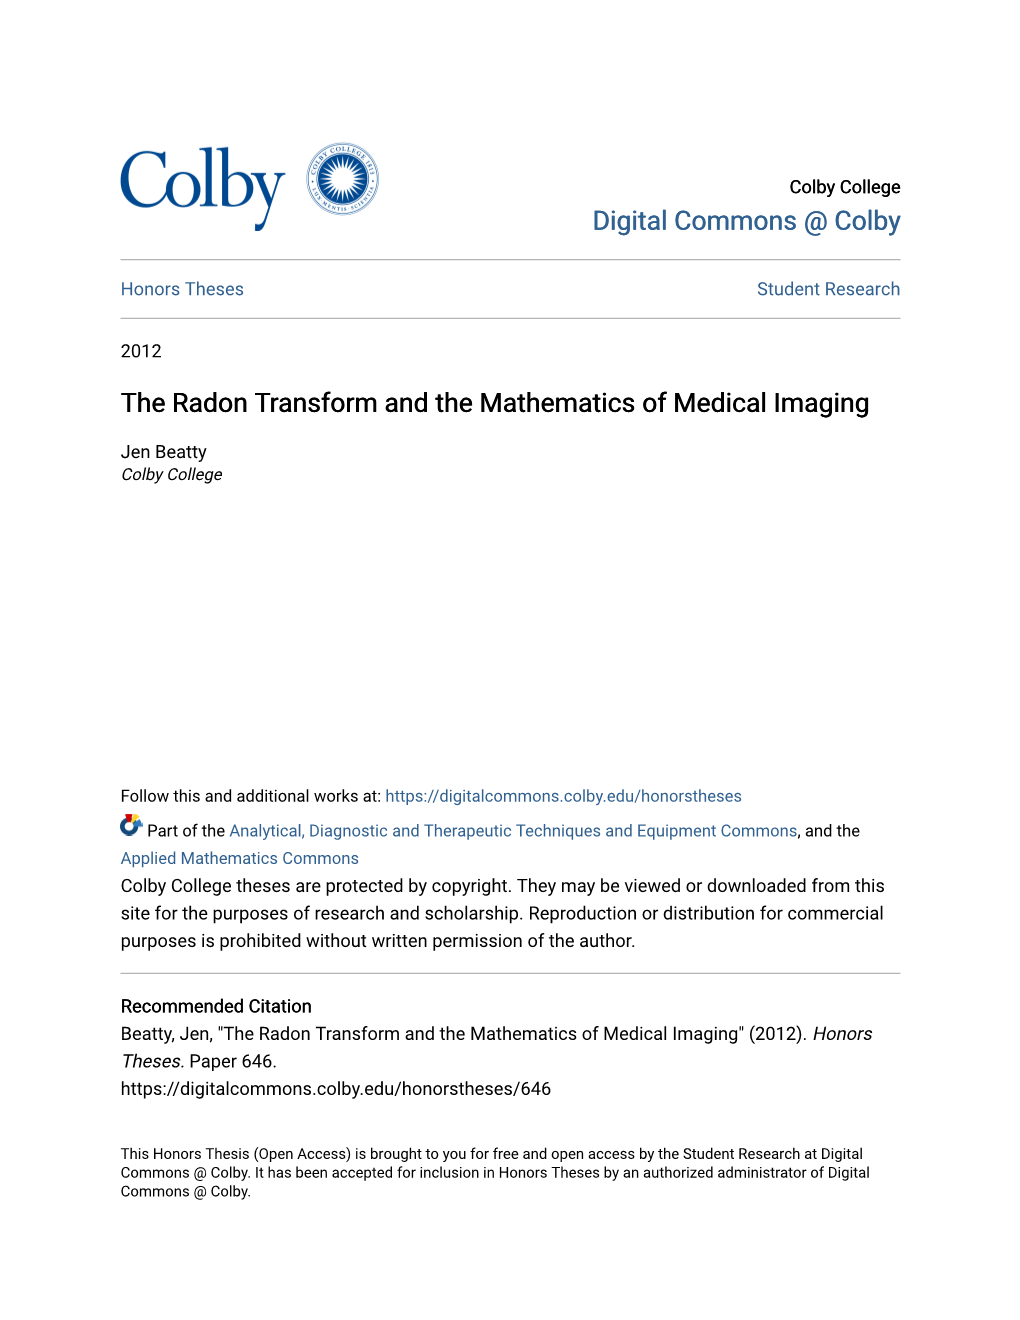 The Radon Transform and the Mathematics of Medical Imaging